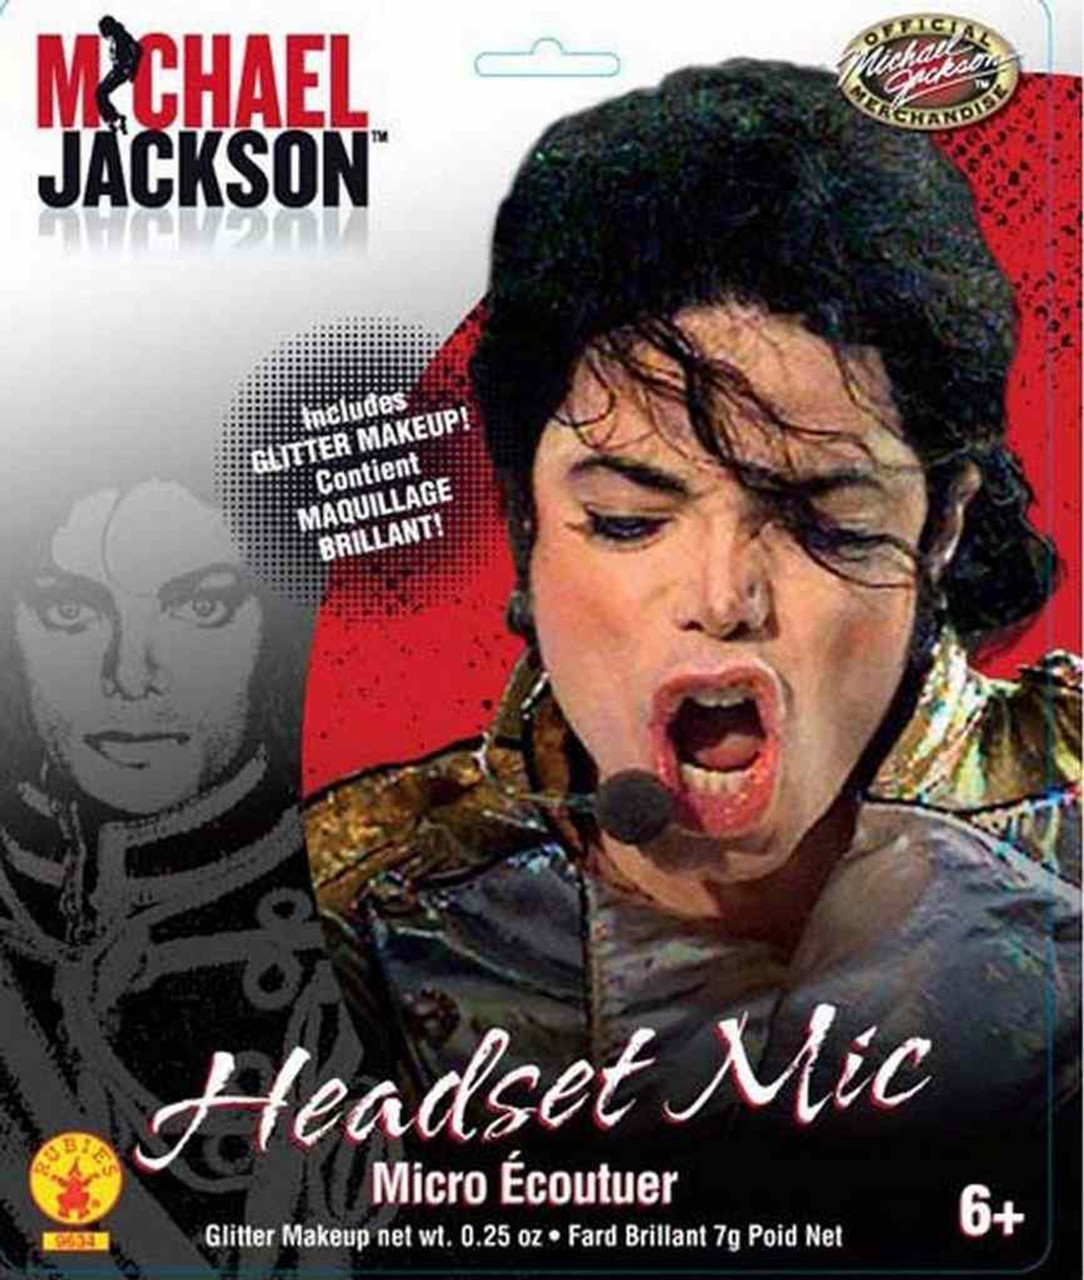 Michael Jackson Headset Microphone Costume Accessory - Parties Plus